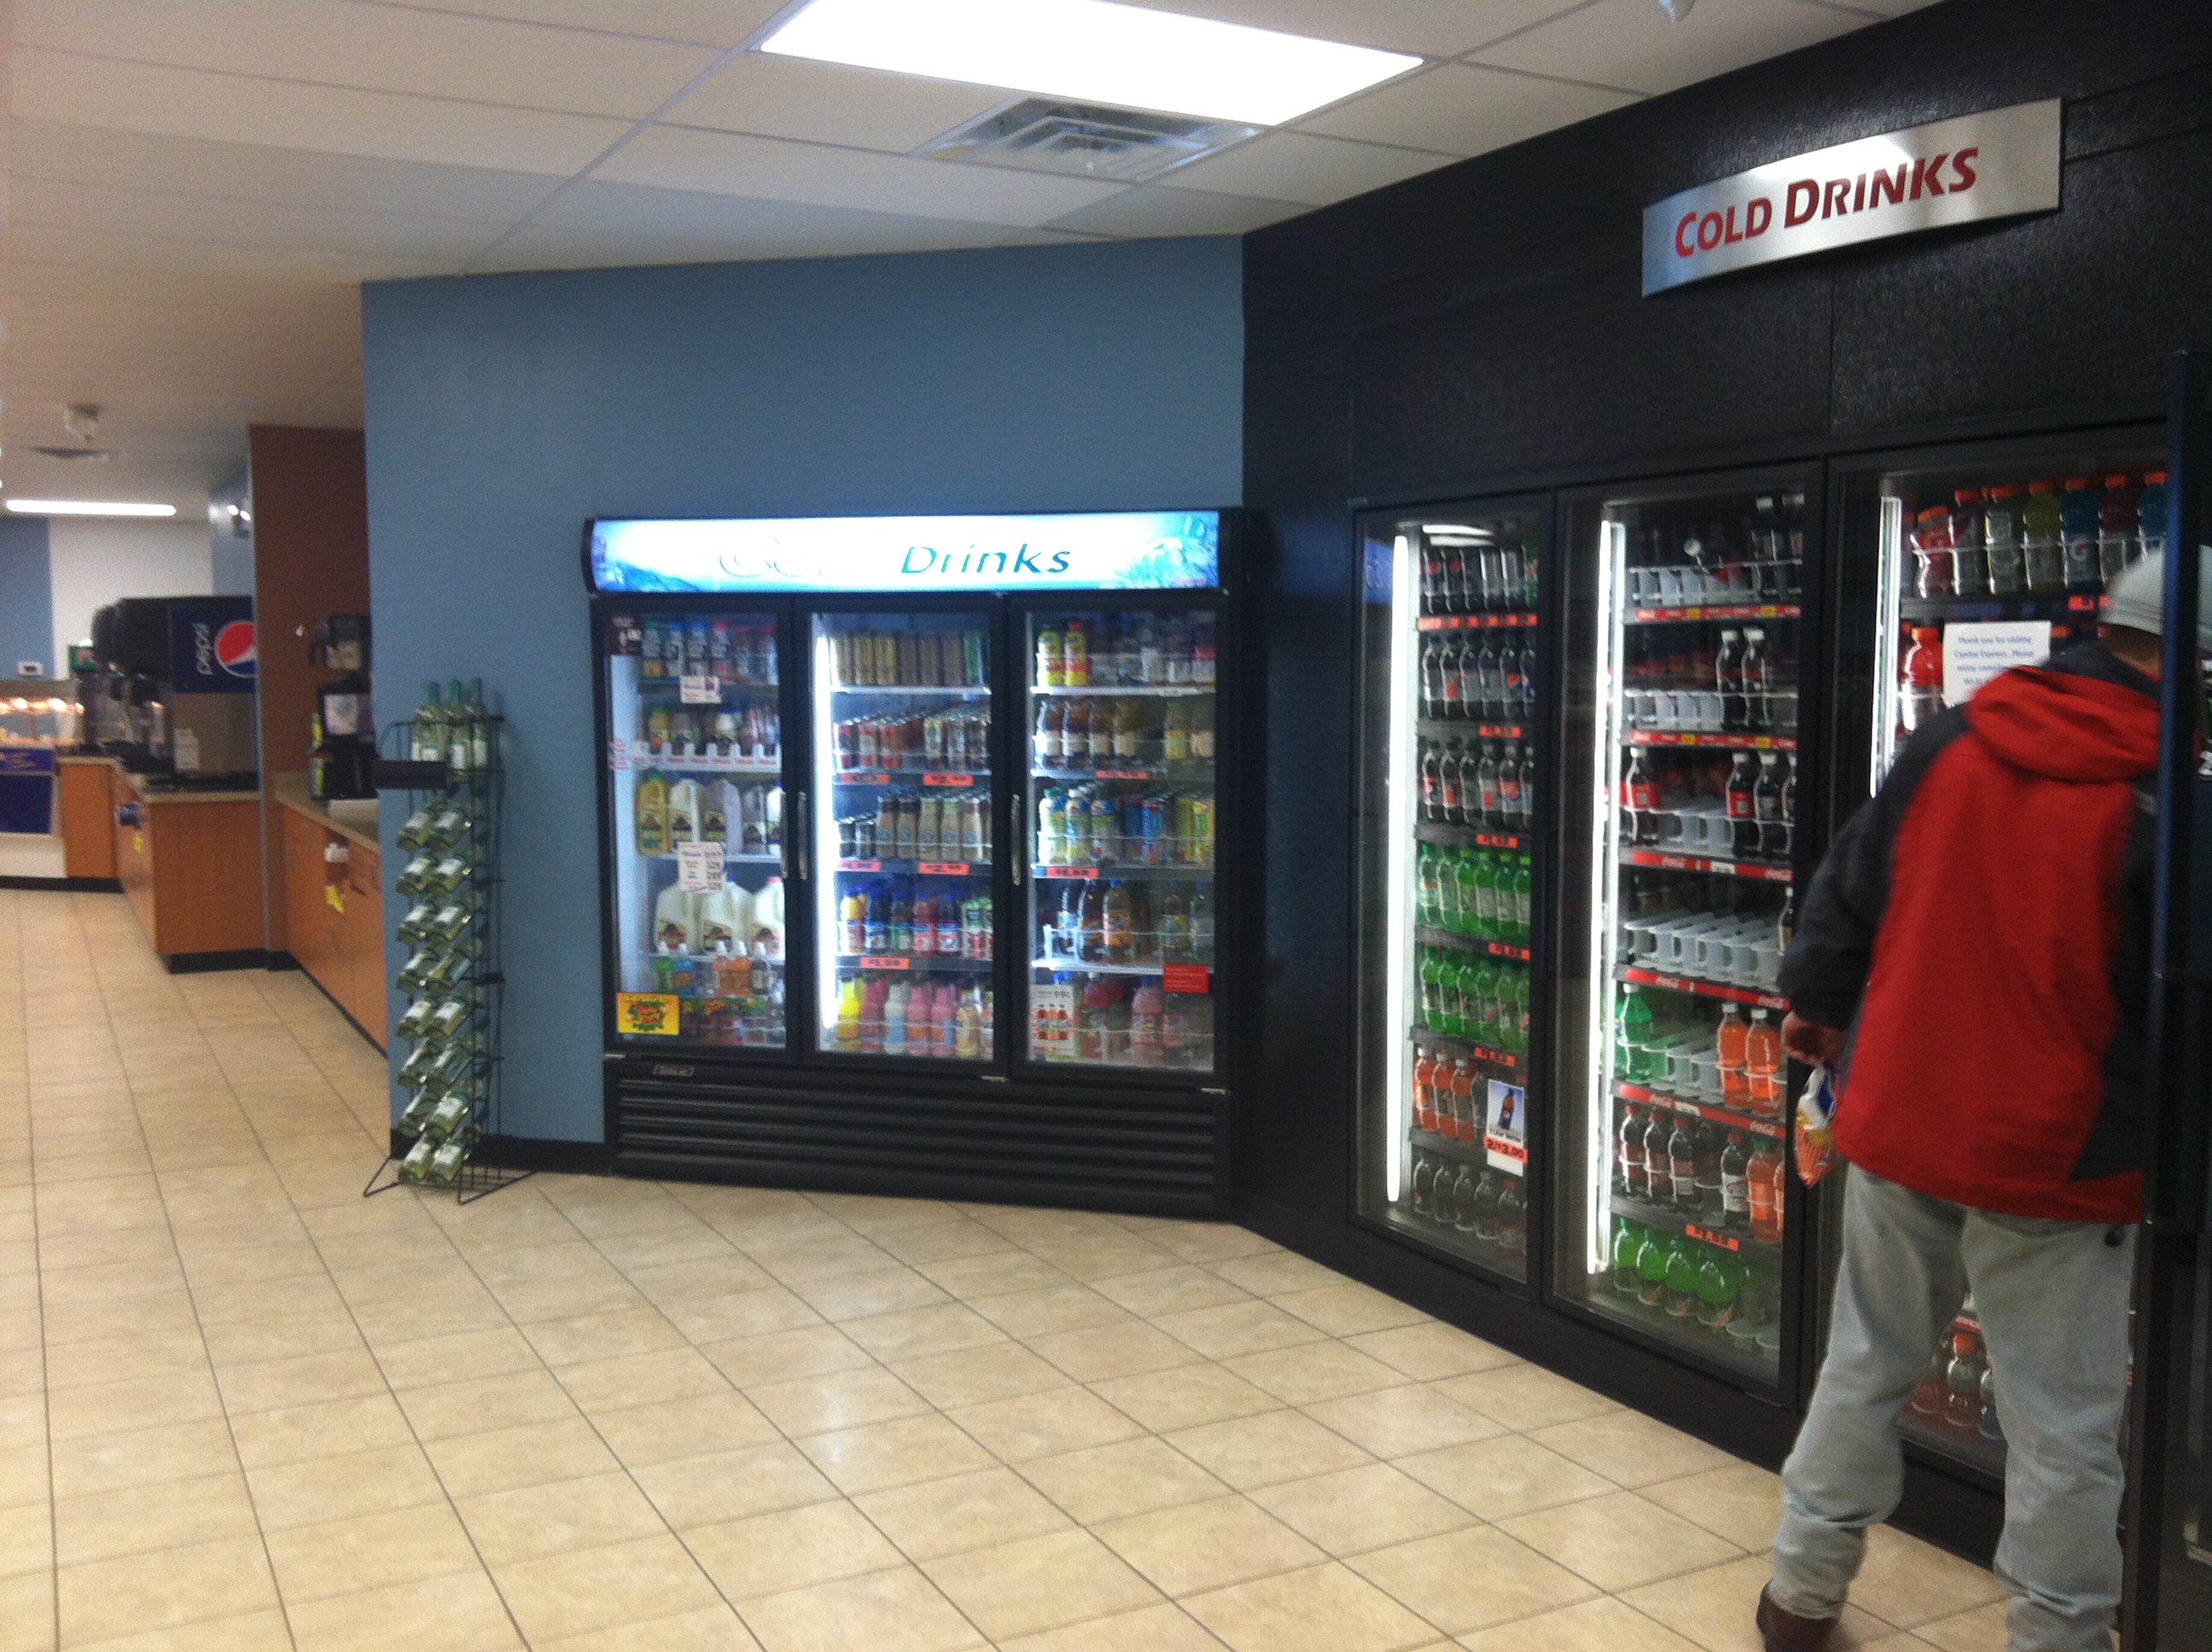 Retail cooler display foodservice equipment